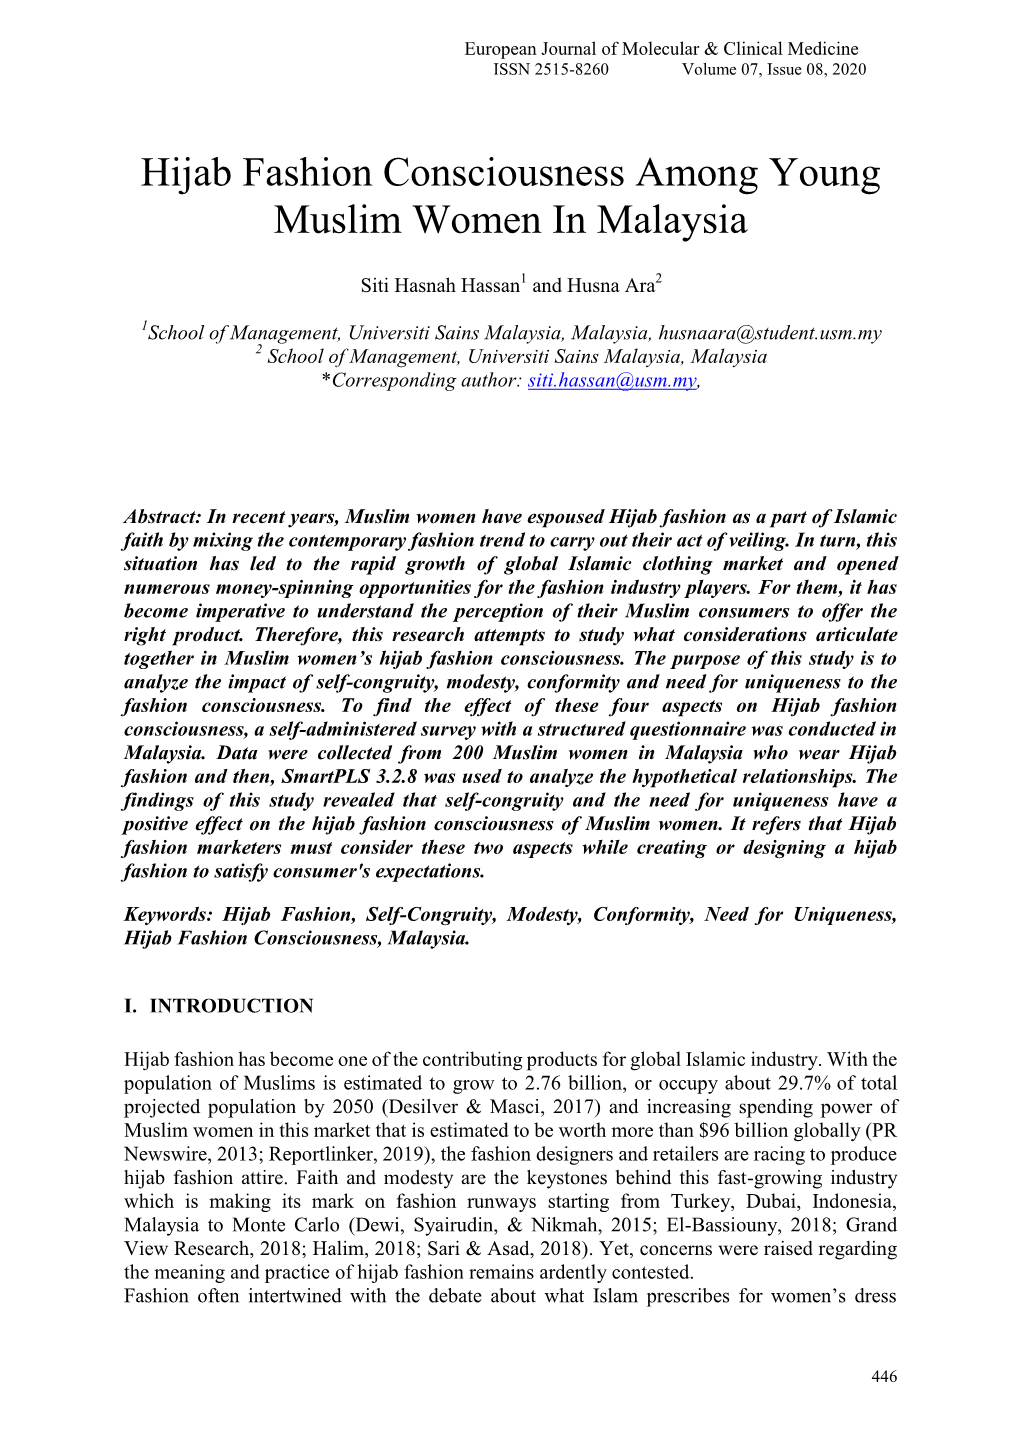 Hijab Fashion Consciousness Among Young Muslim Women in Malaysia